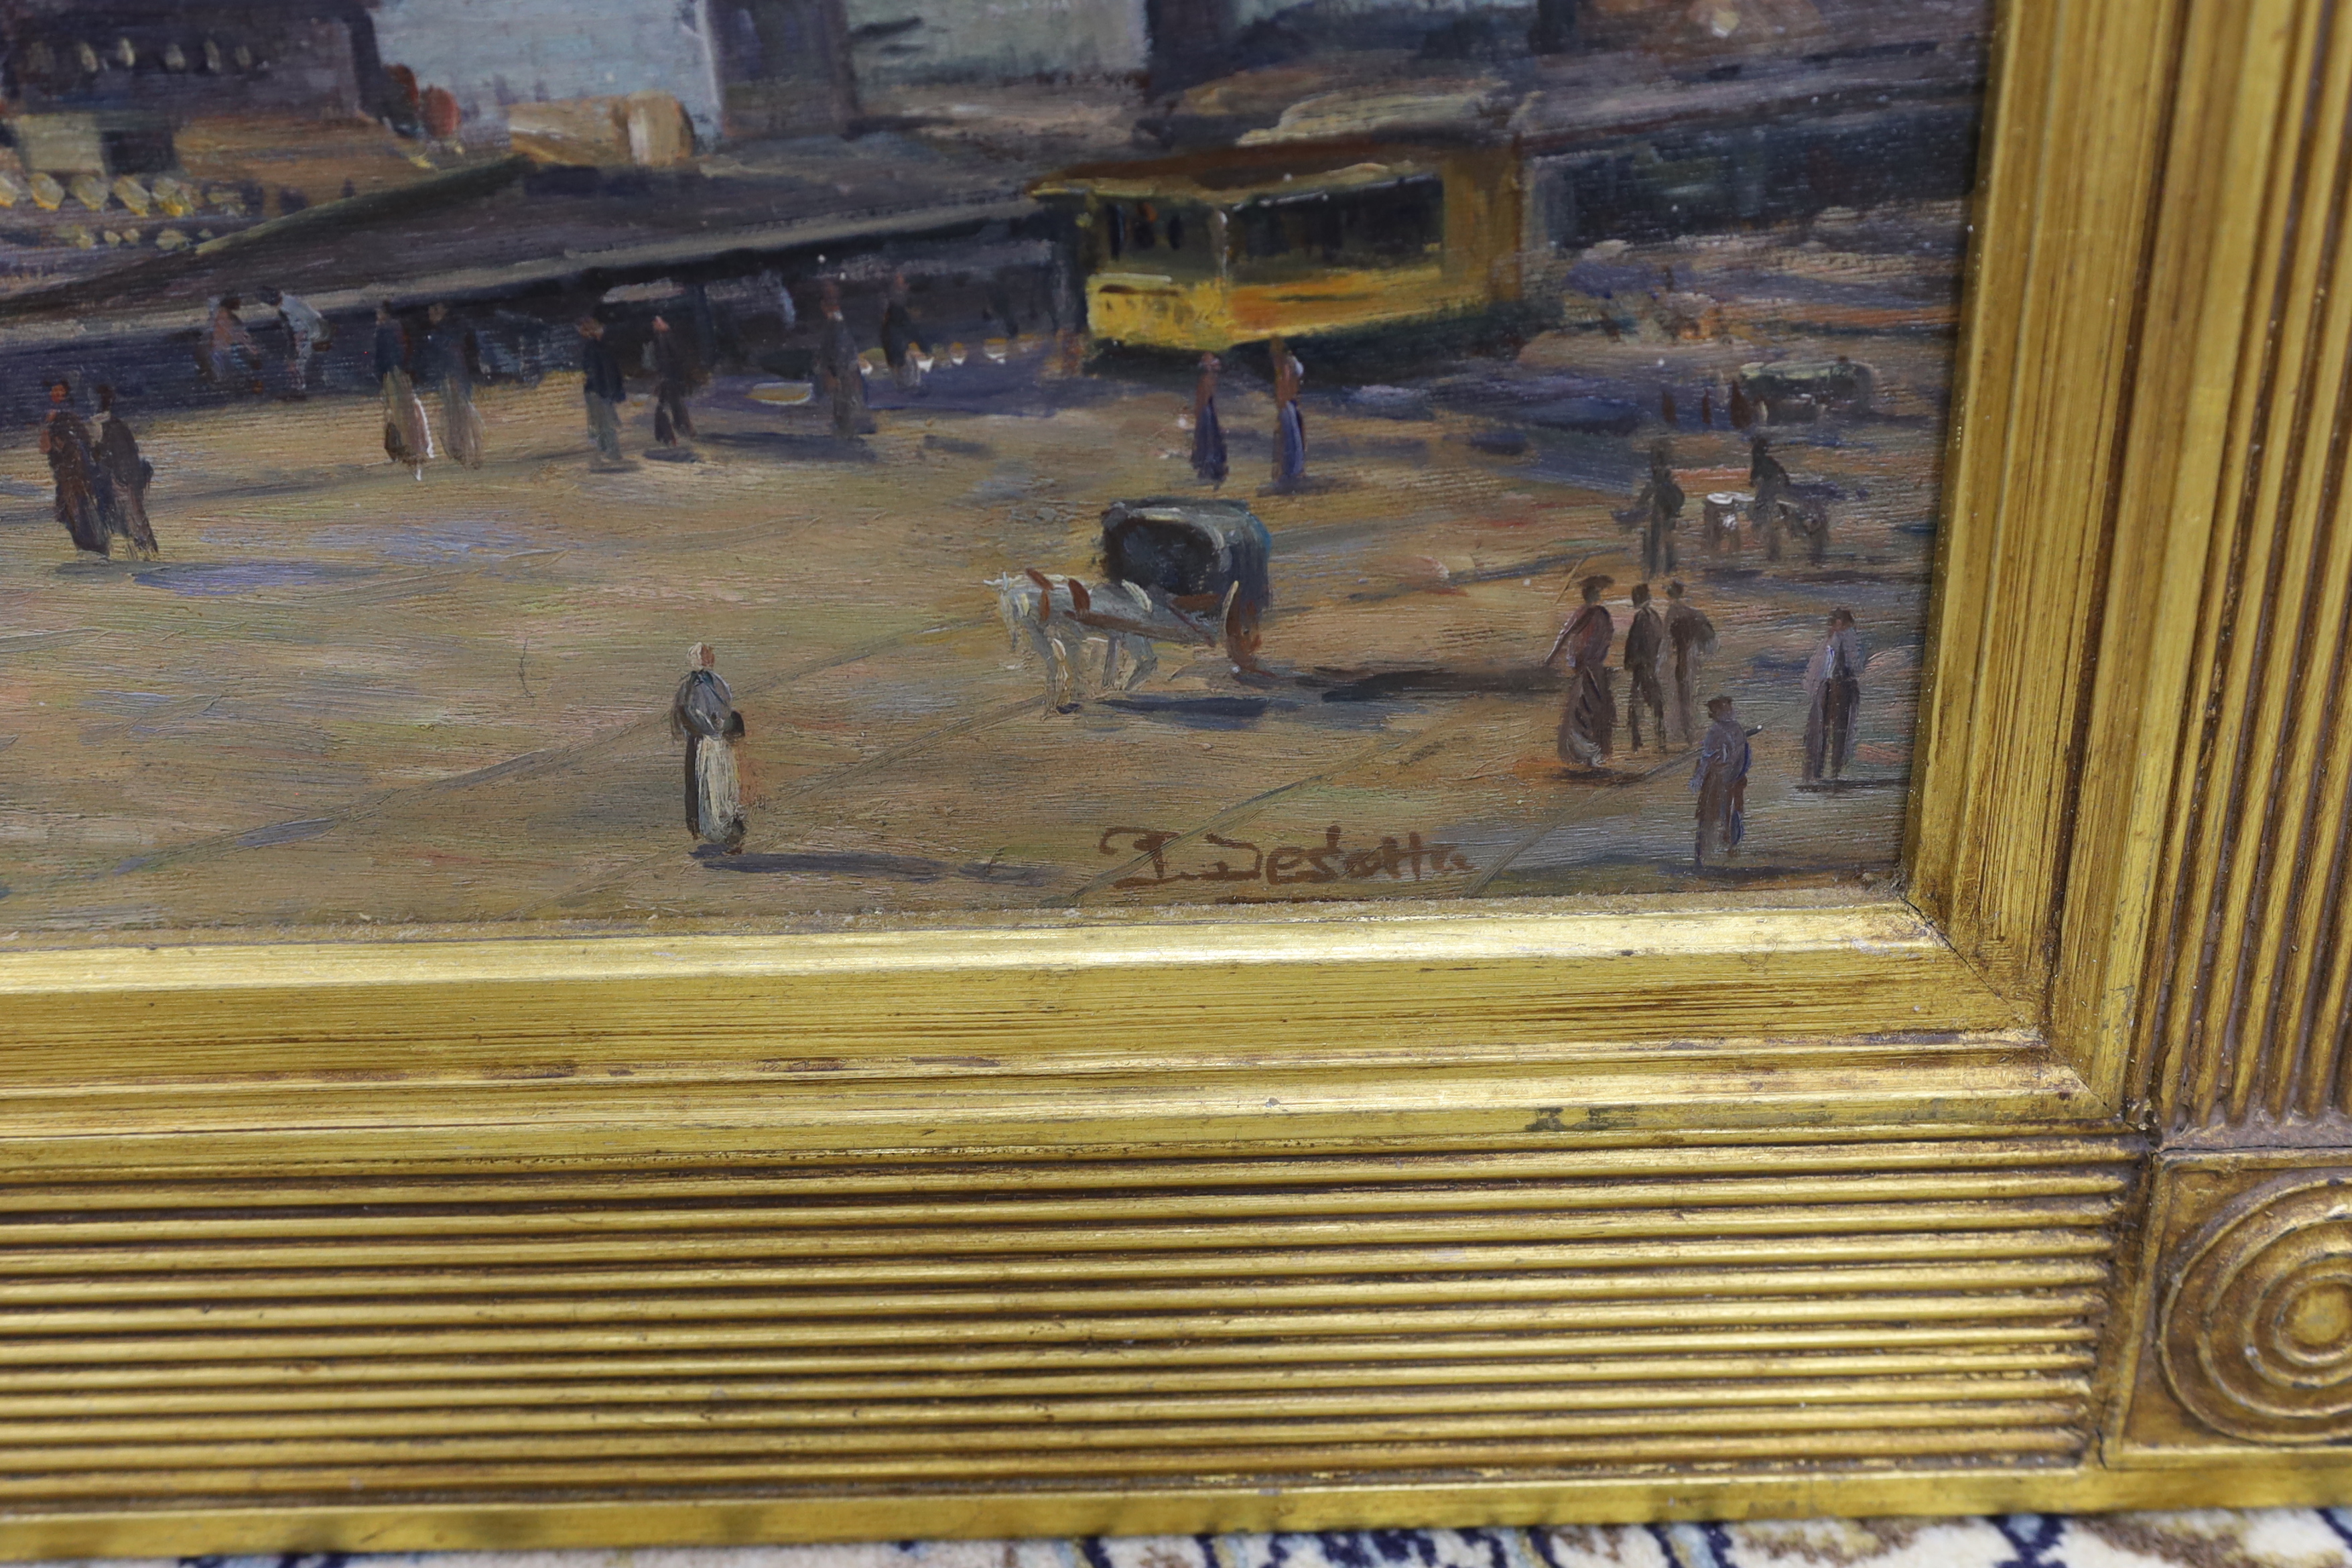 J. Desotta, oil on canvas board, City riverscape, signed, 49 x 59cm